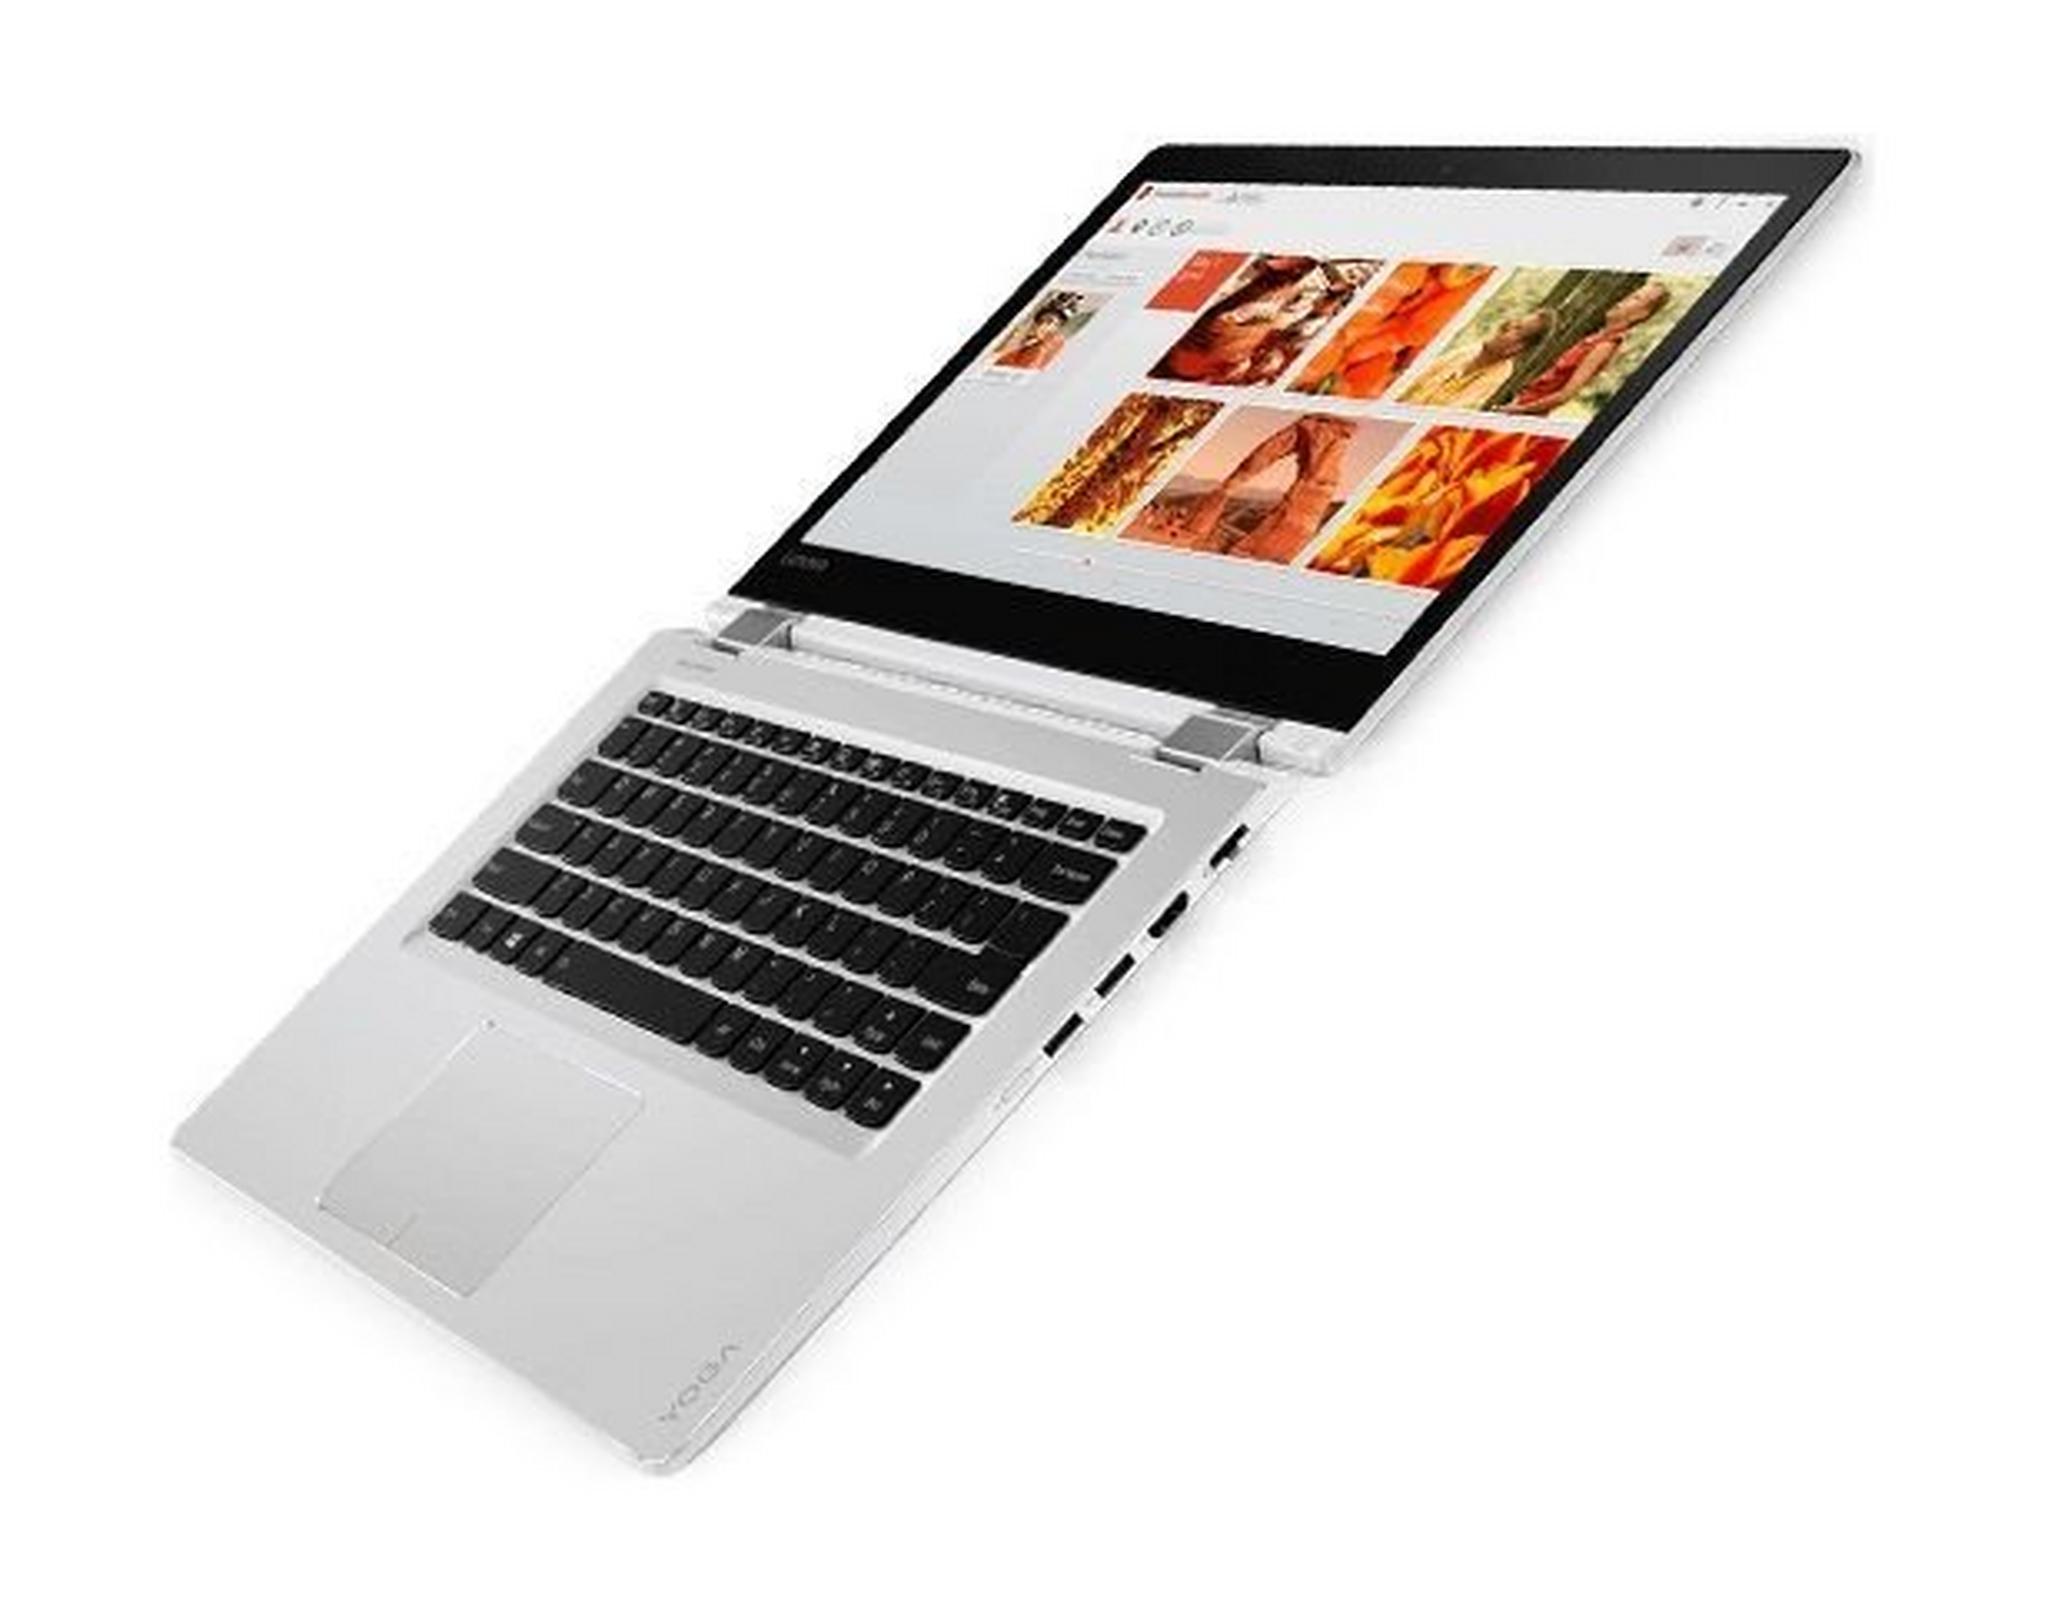 Lenovo Yoga 510 Core-i7 8GB RAM 1TB HDD 2GB AMD 14-inch Touchscreen Convertible Laptop – White